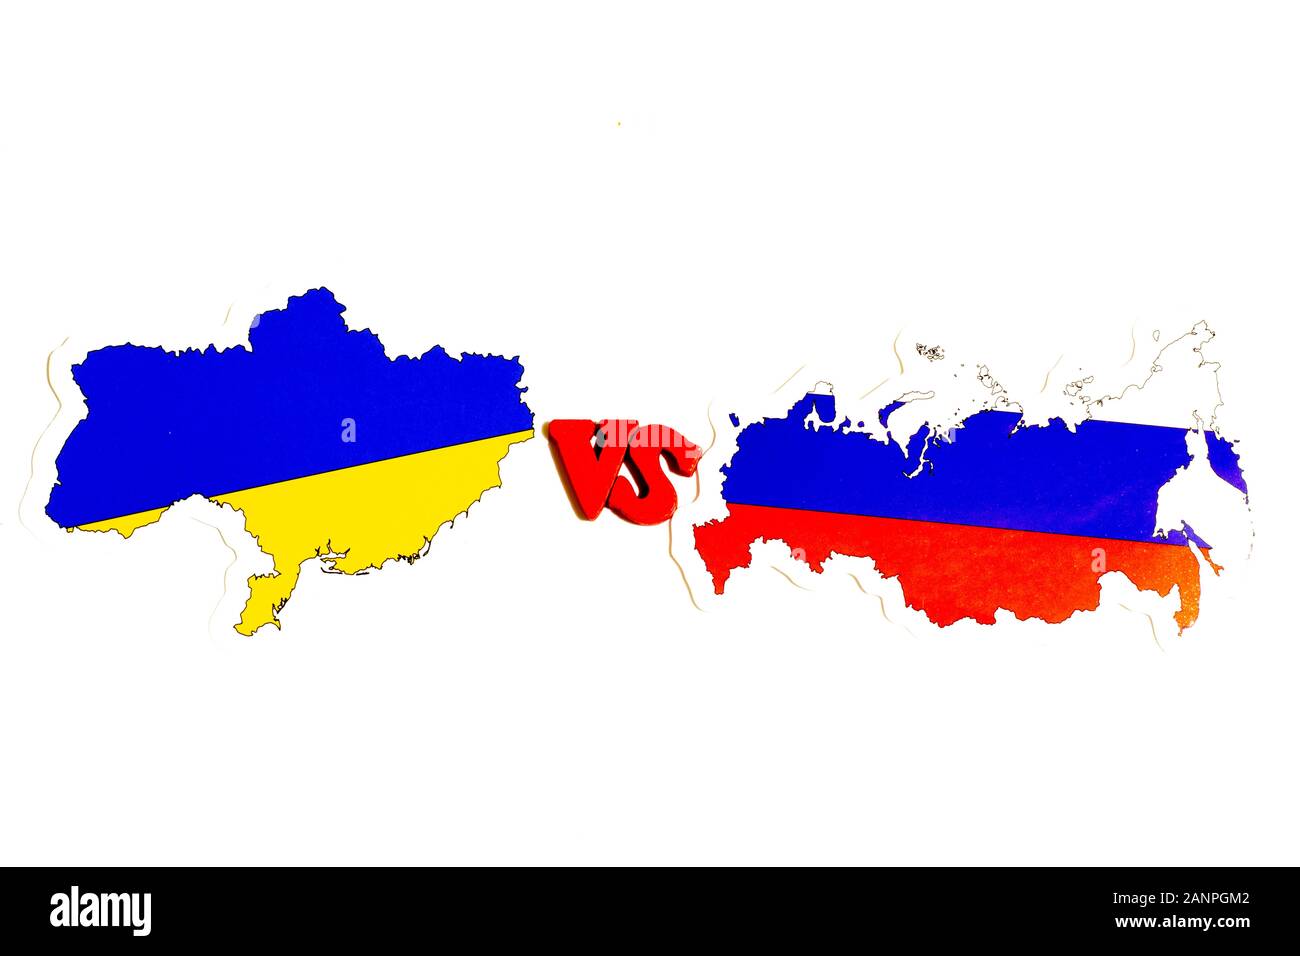 Los Angeles, Kalifornien, USA - 17. Januar 2020: Russland vs. Ukraine Konzept. Politische Illustration. Nationalflaggen, Bildmaterial Stockfoto